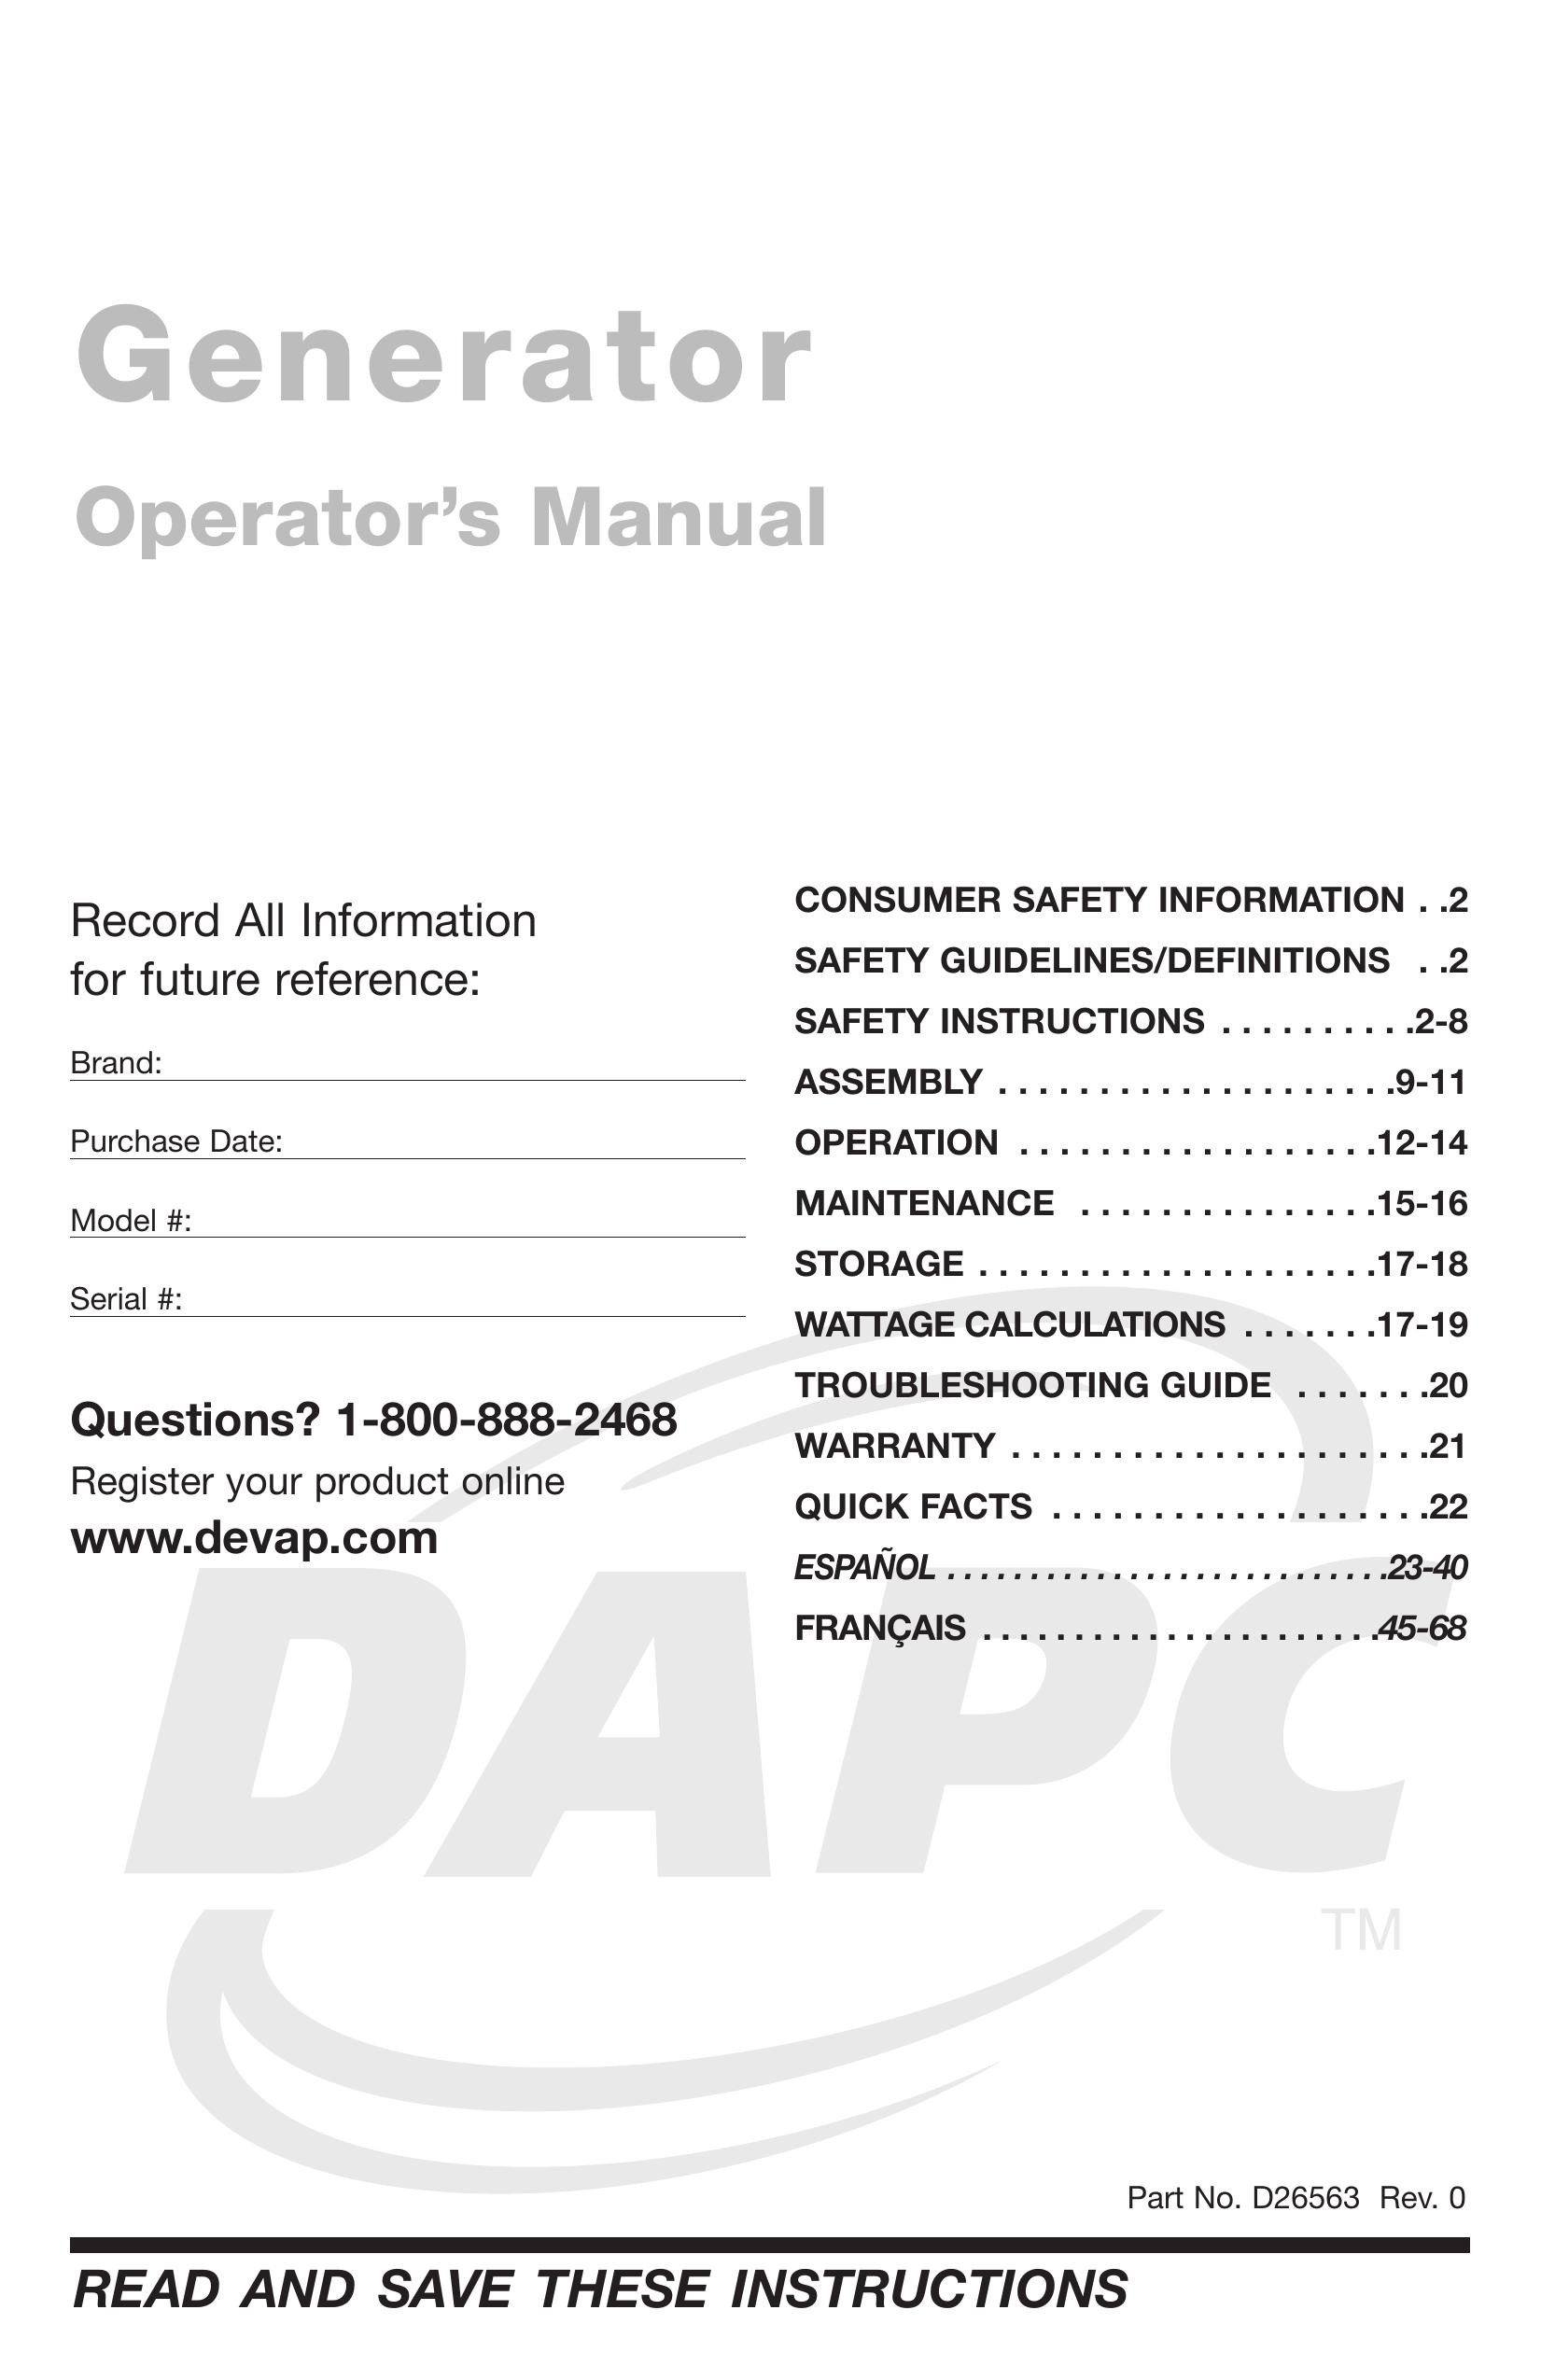 DeVillbiss Air Power Company D26563 Portable Generator User Manual